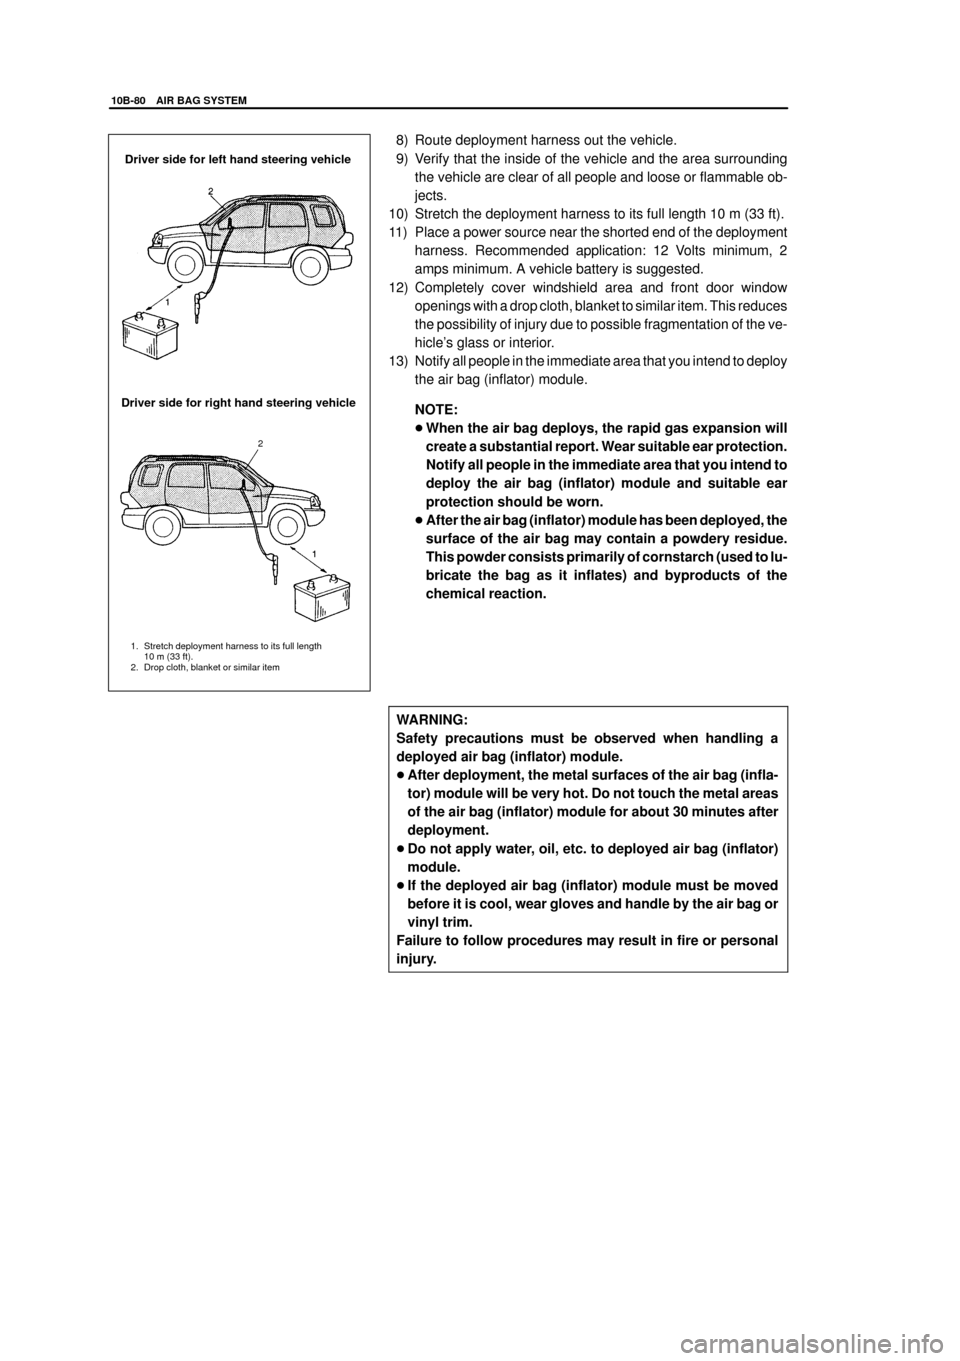 SUZUKI GRAND VITARA 2004 2.G Service Workshop Manual YH4
GRAND
VITARA
Driver side for left hand steering vehicle
Driver side for right hand steering vehicle
1. Stretch deployment harness to its full length 
10 m (33 ft).
2. Drop cloth, blanket or simila